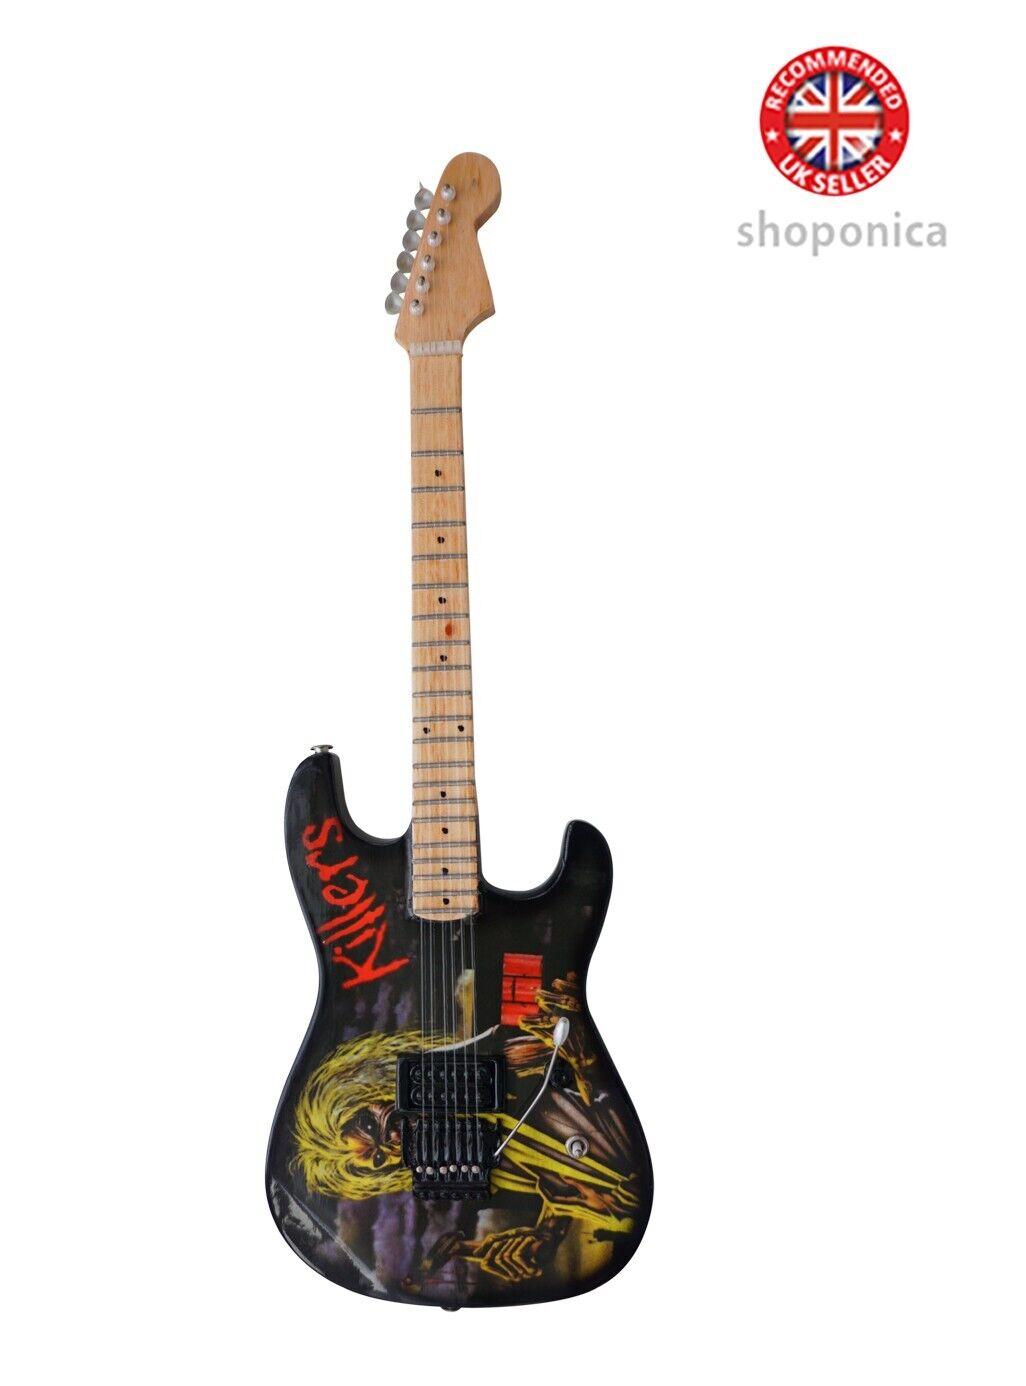 Wooden Miniature Guitar Replica Iron Maiden Tribute